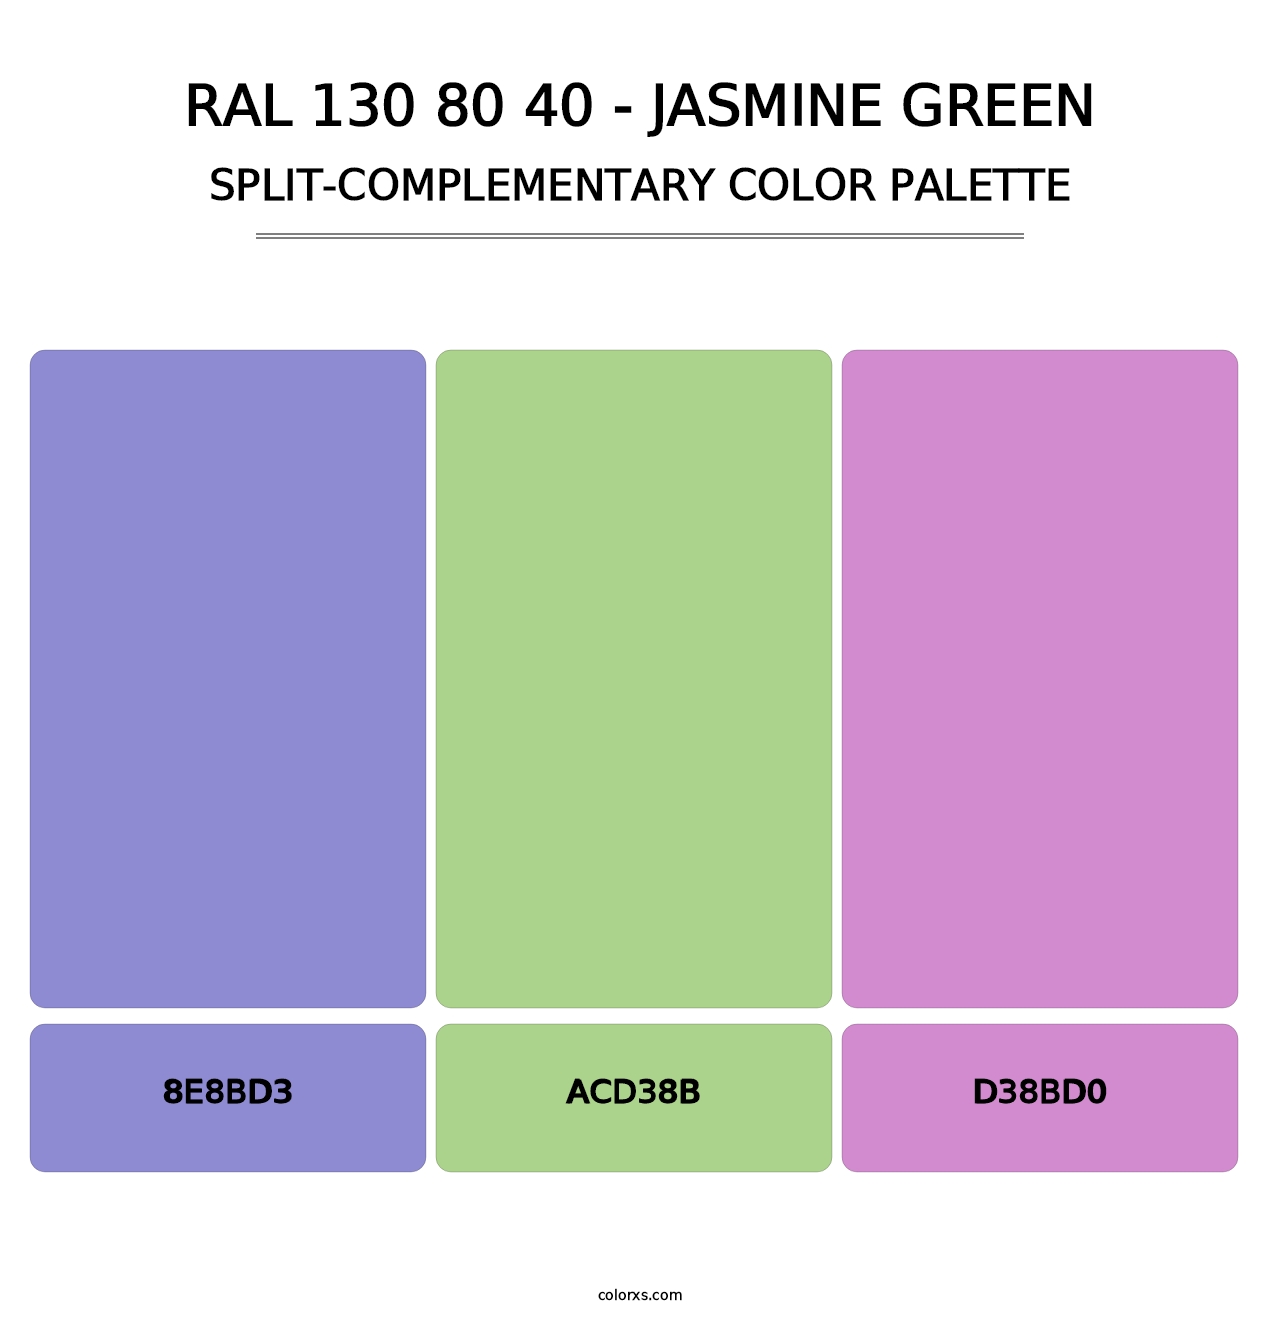 RAL 130 80 40 - Jasmine Green - Split-Complementary Color Palette